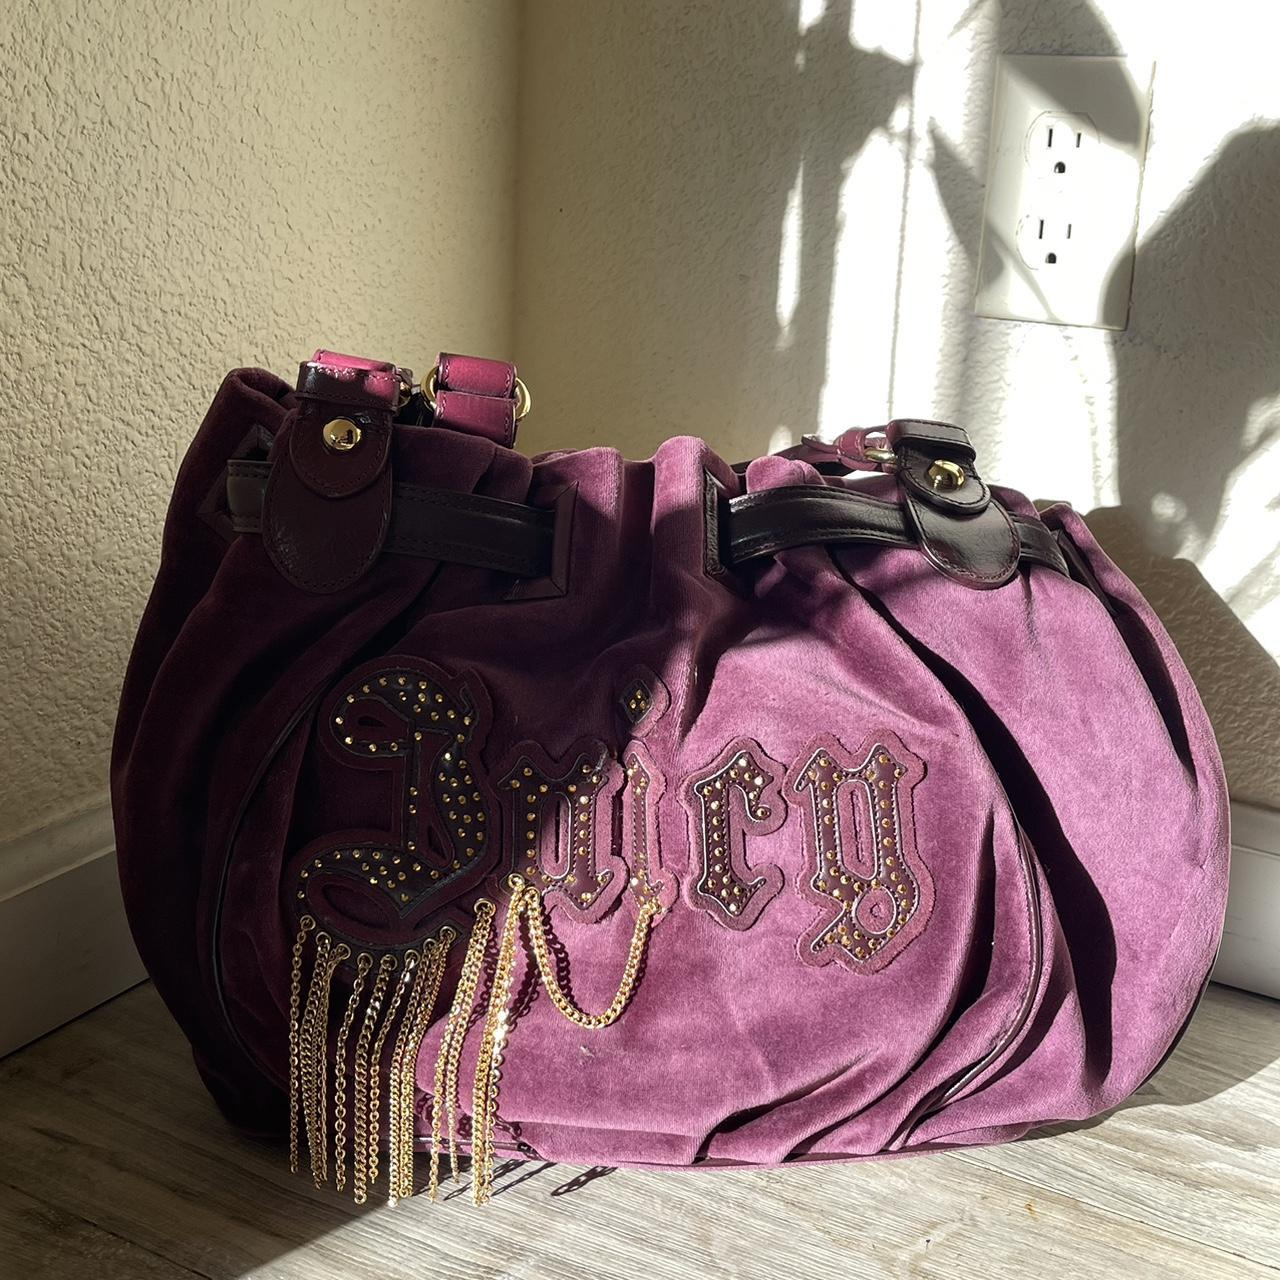 Lot - Purple Juicy Couture Purse